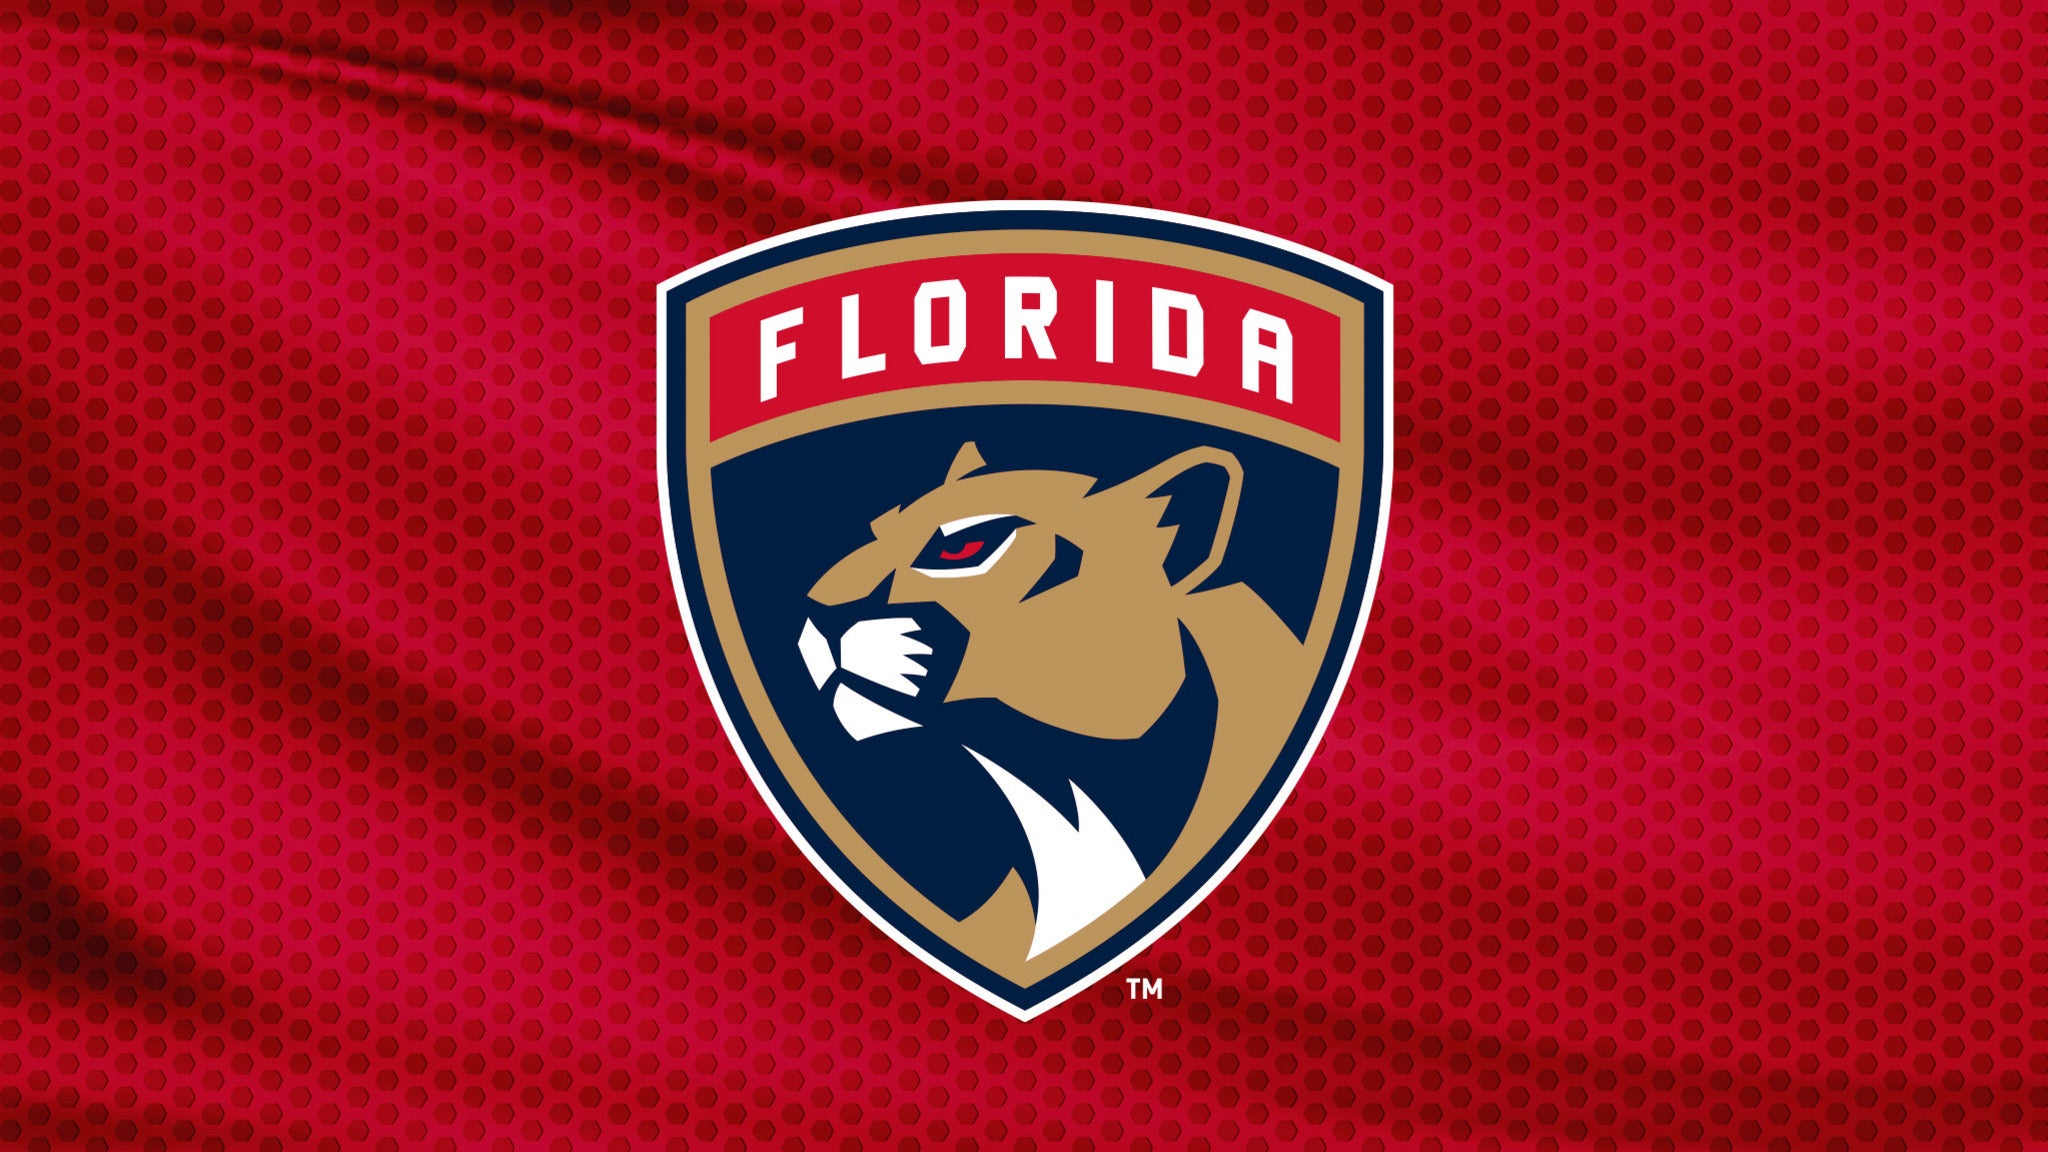 Florida Panthers vs. St. Louis Blues at FLA Live Arena - Sunrise, FL 33323